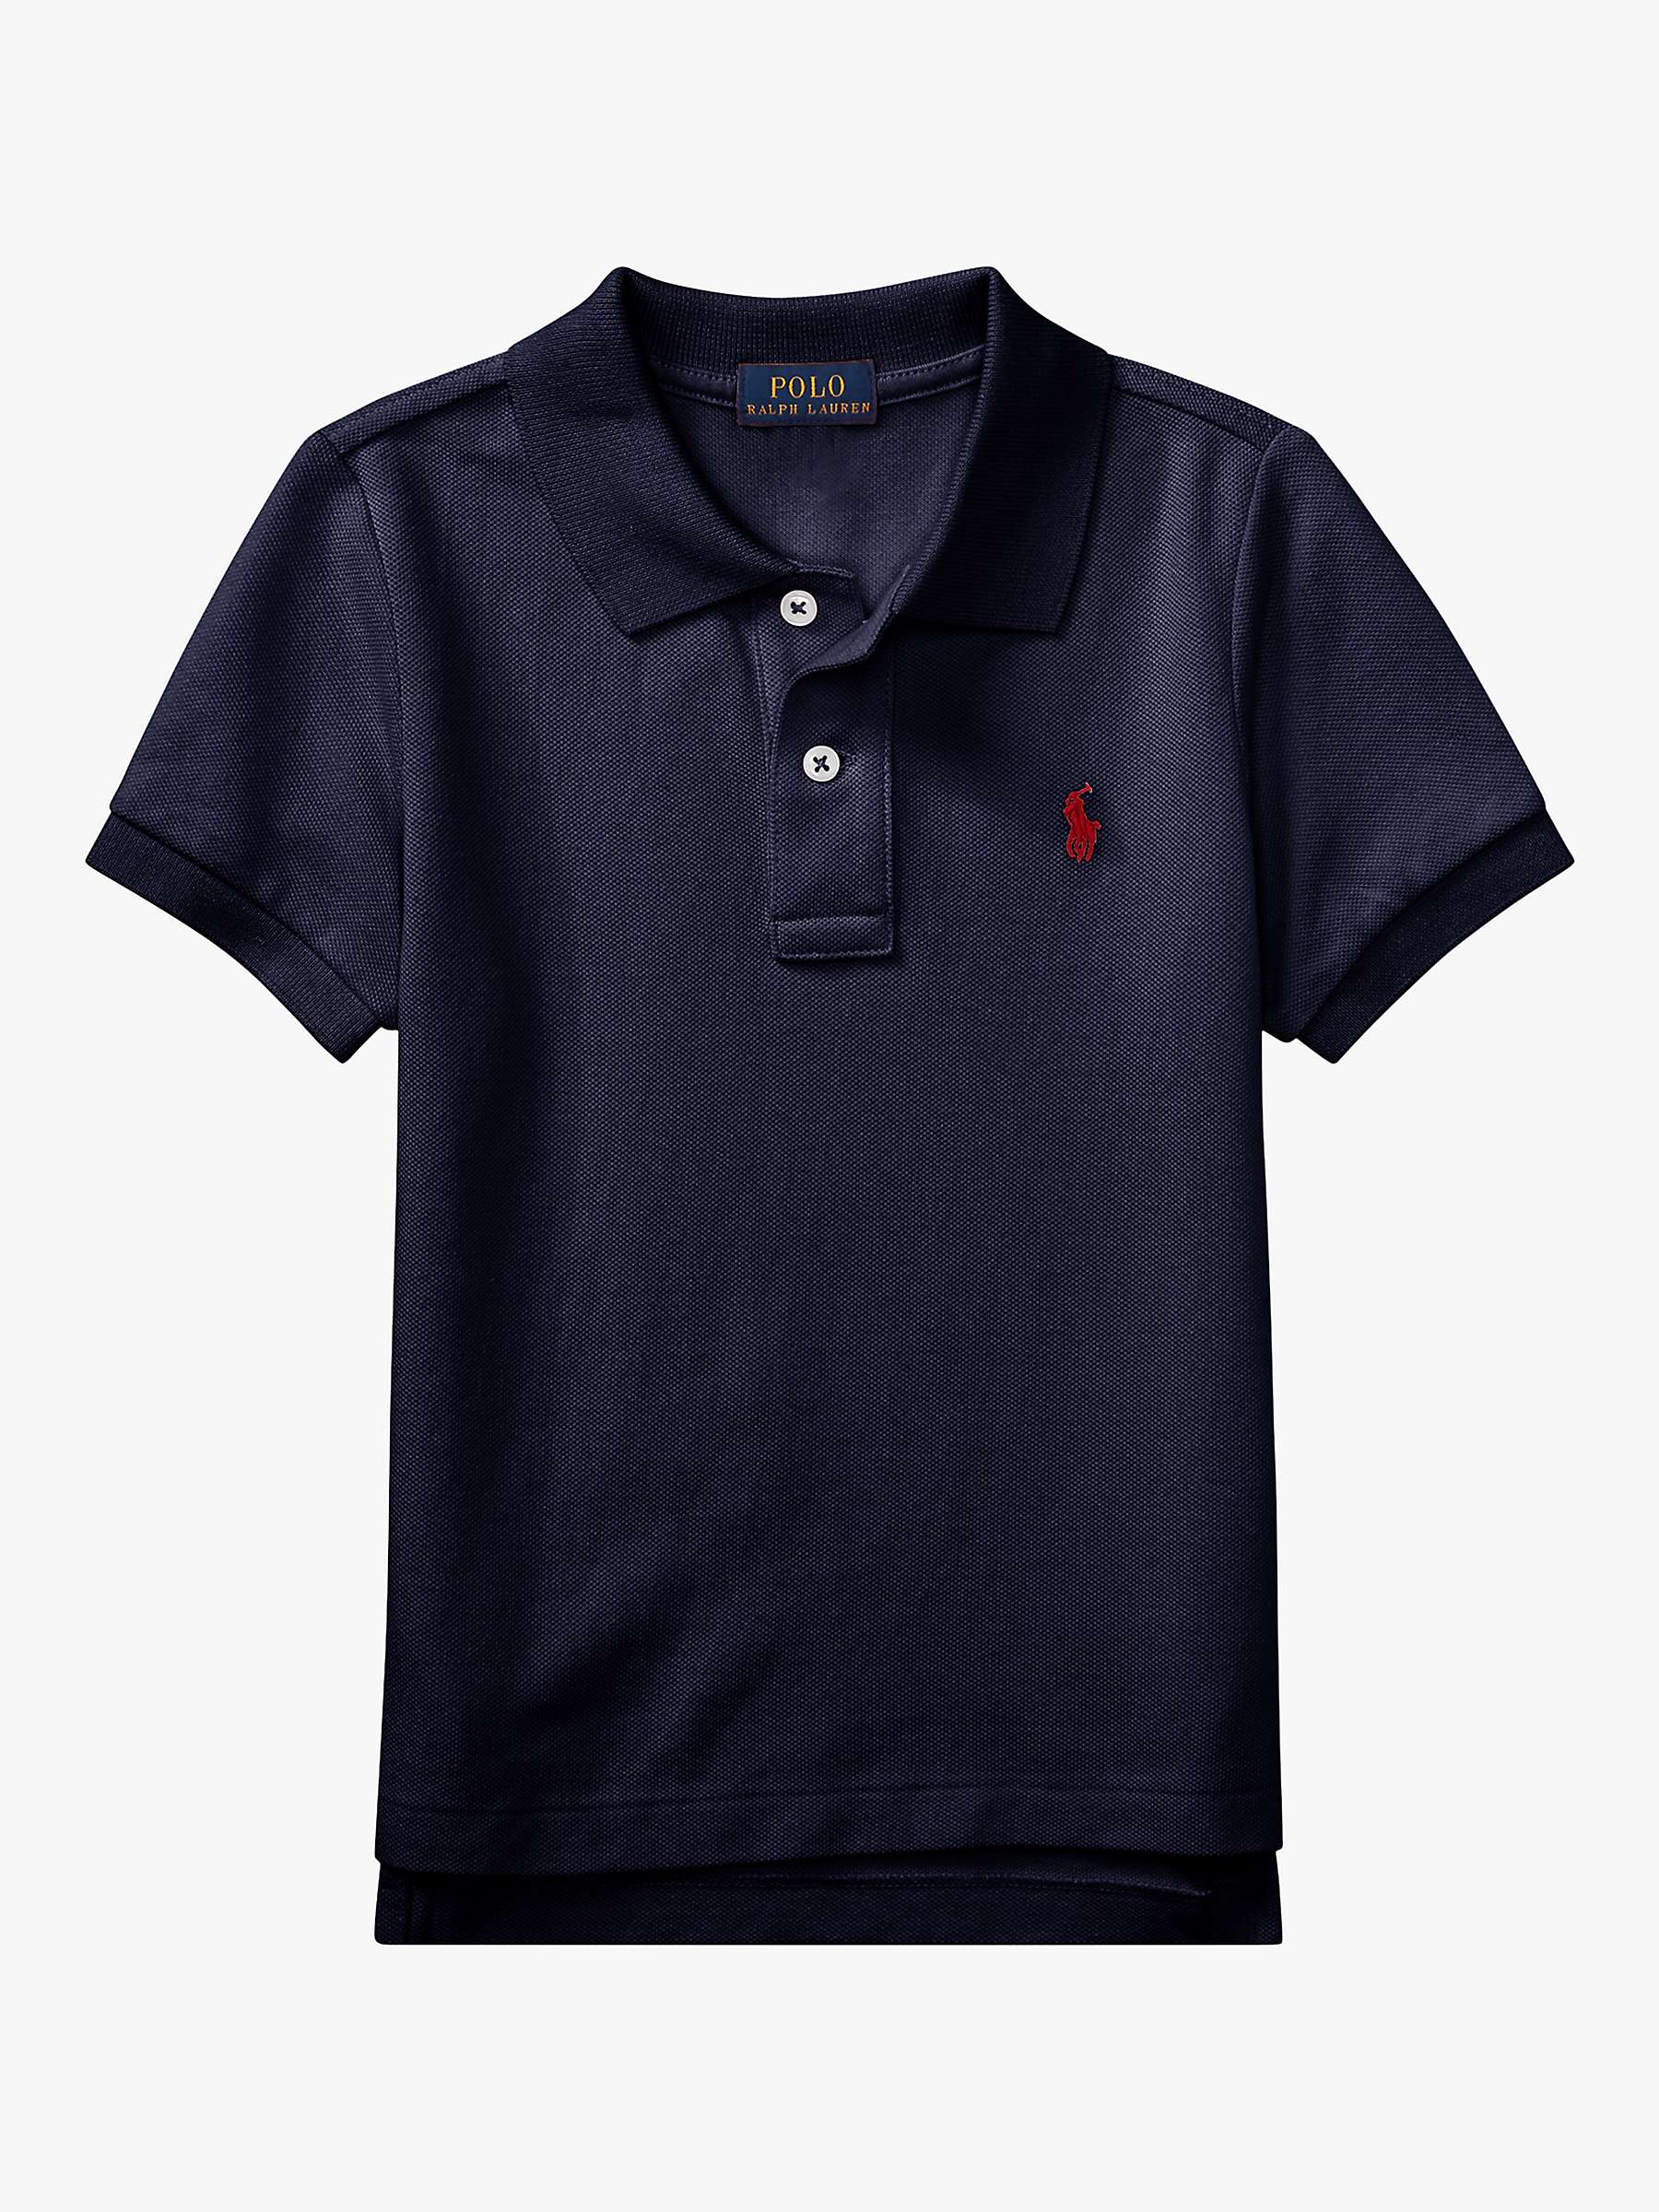 Buy Polo Ralph Lauren Kids' Polo Shirt Online at johnlewis.com